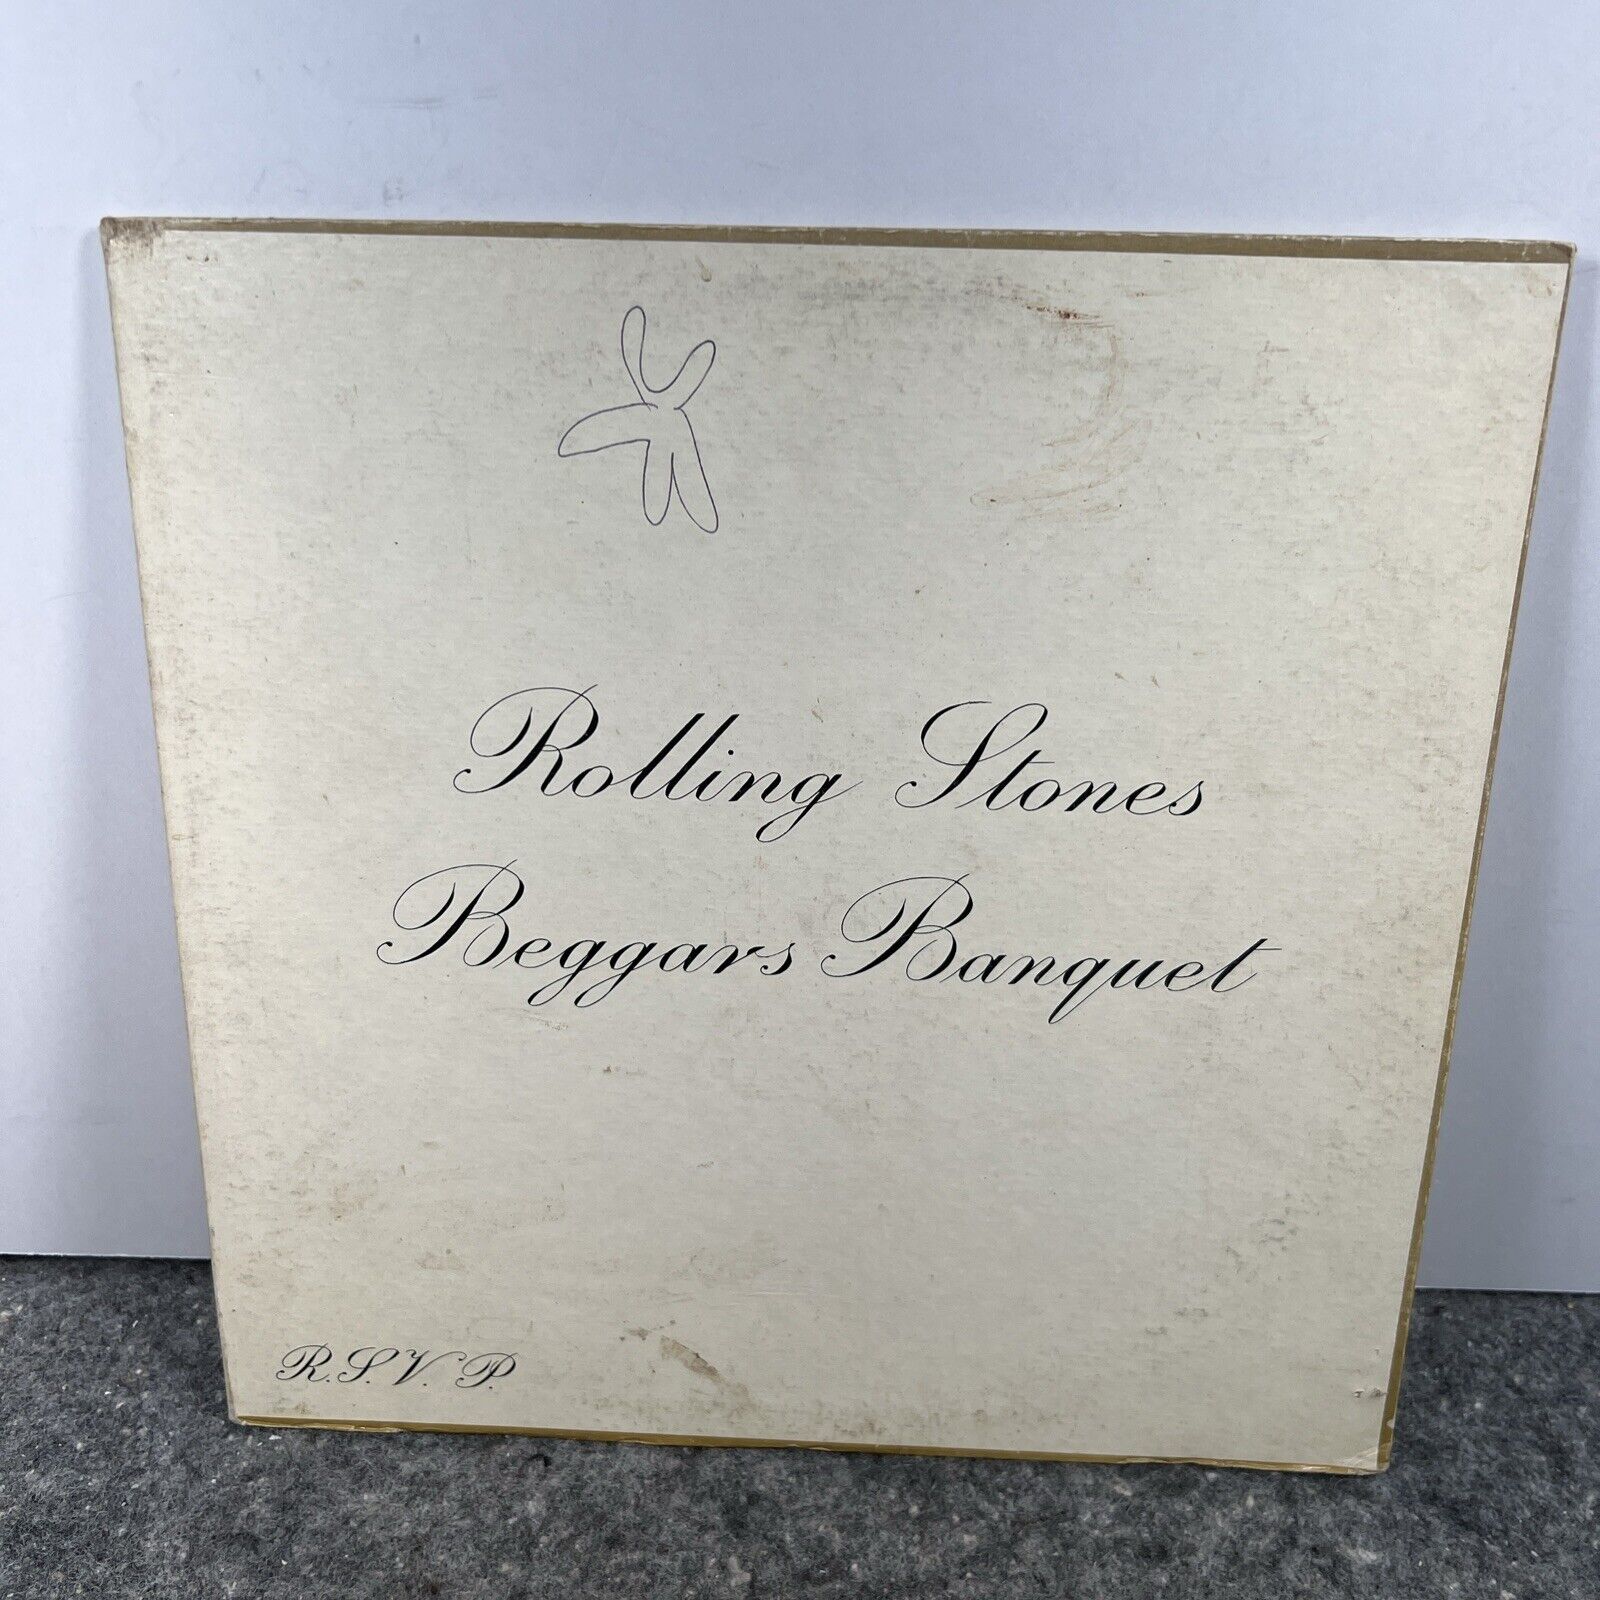 THE ROLLING STONES - BEGGARS BANQUET - Vinyl Record Album - PS 539 - VG/G+